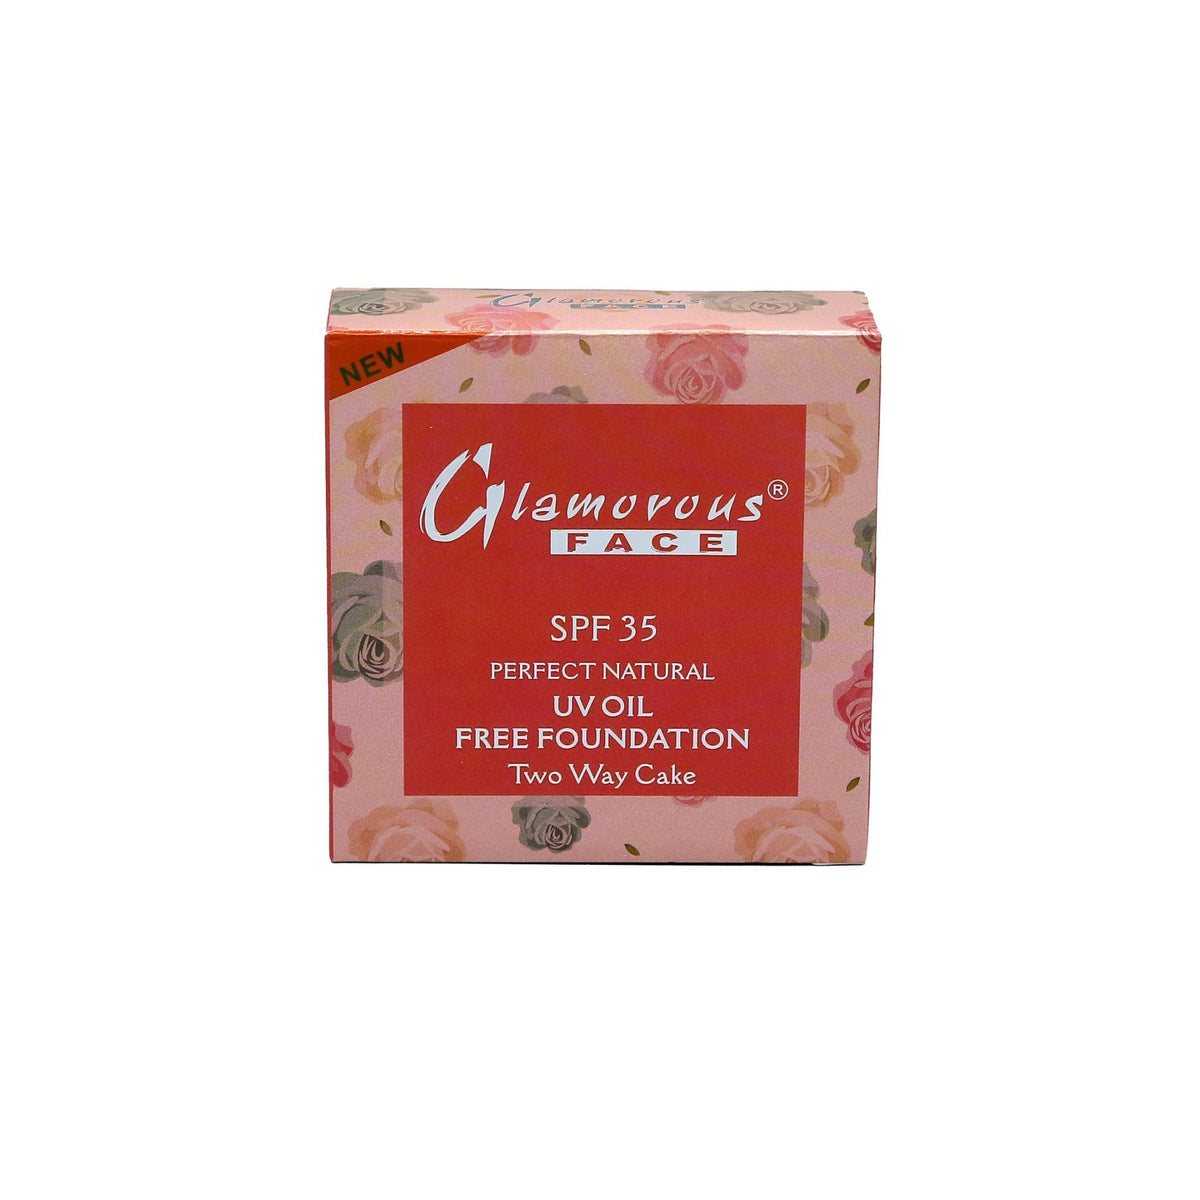 Glamorous Face Powder UV Oil Free Foundation Two Way Cake SPF 35 freeshipping - lasertag.pk